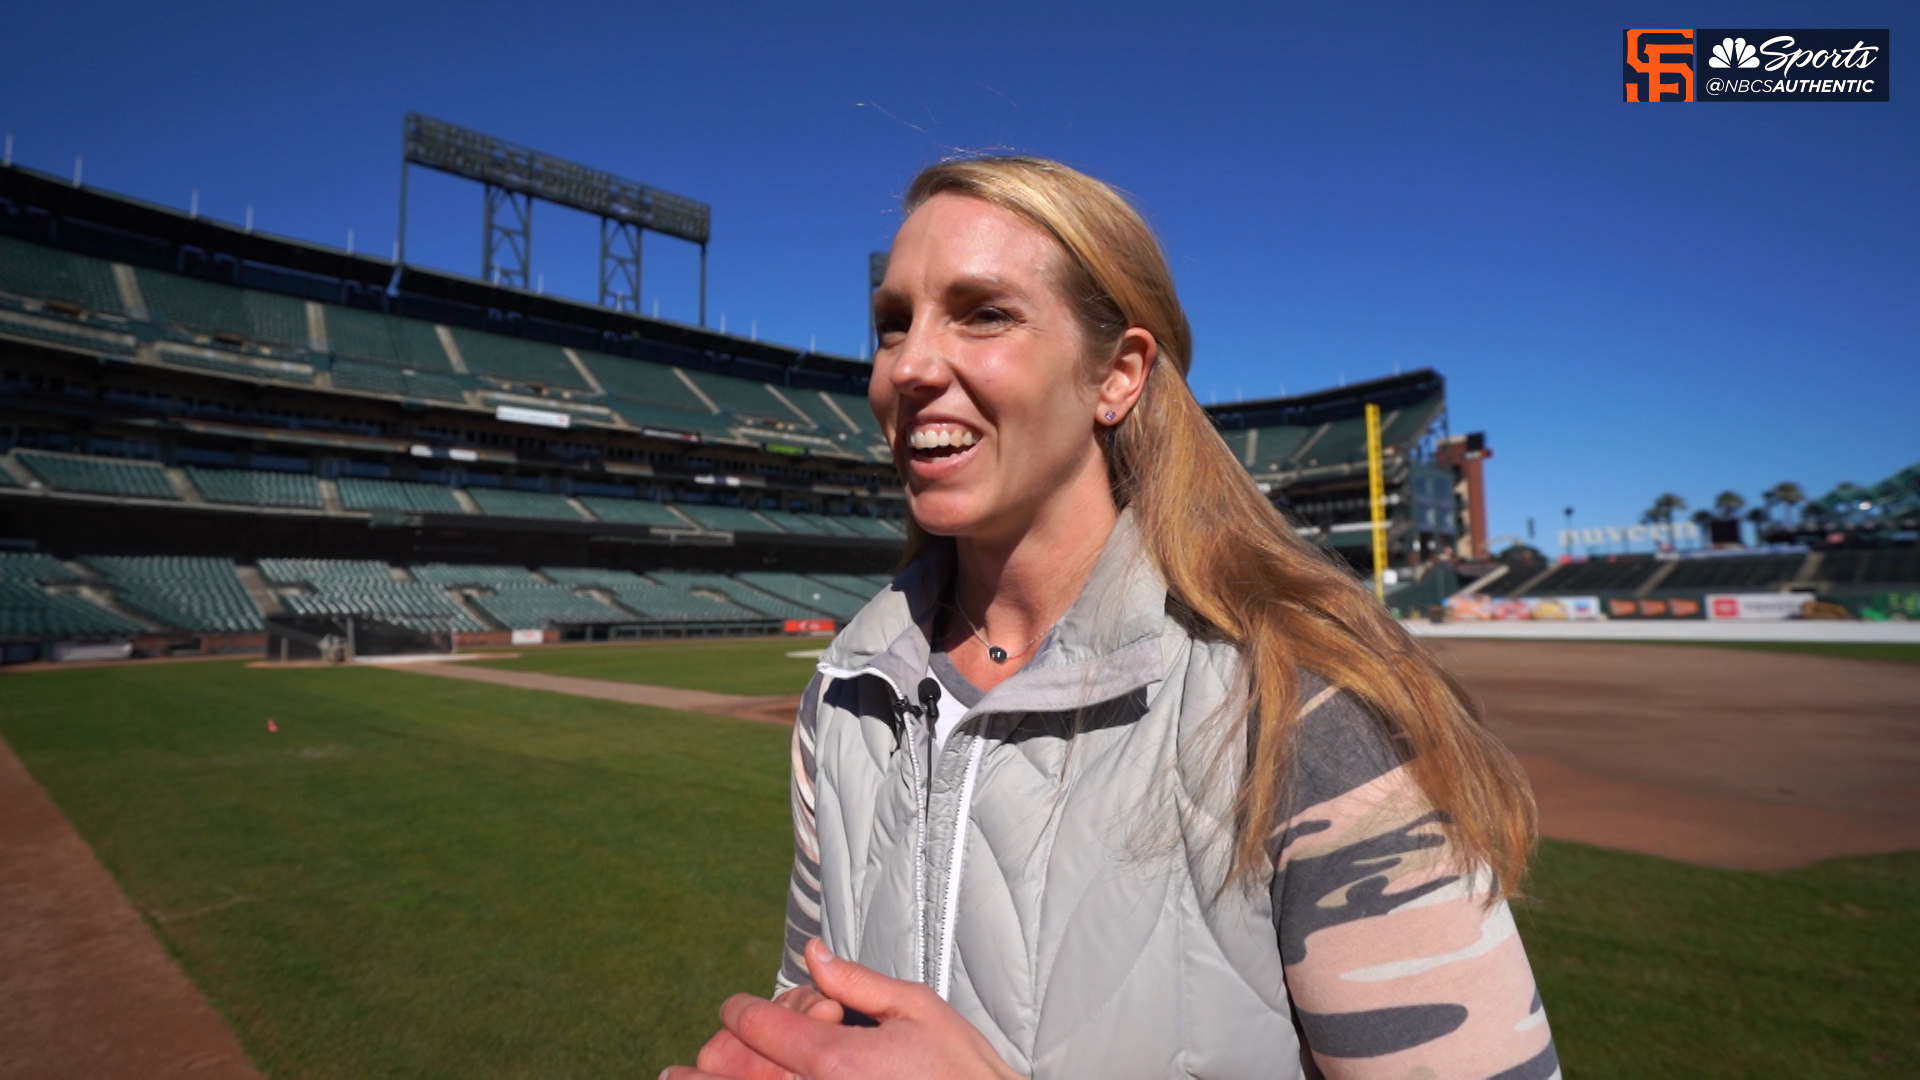 Assistant coach Alyssa Nakken interviews for San Francisco Giants